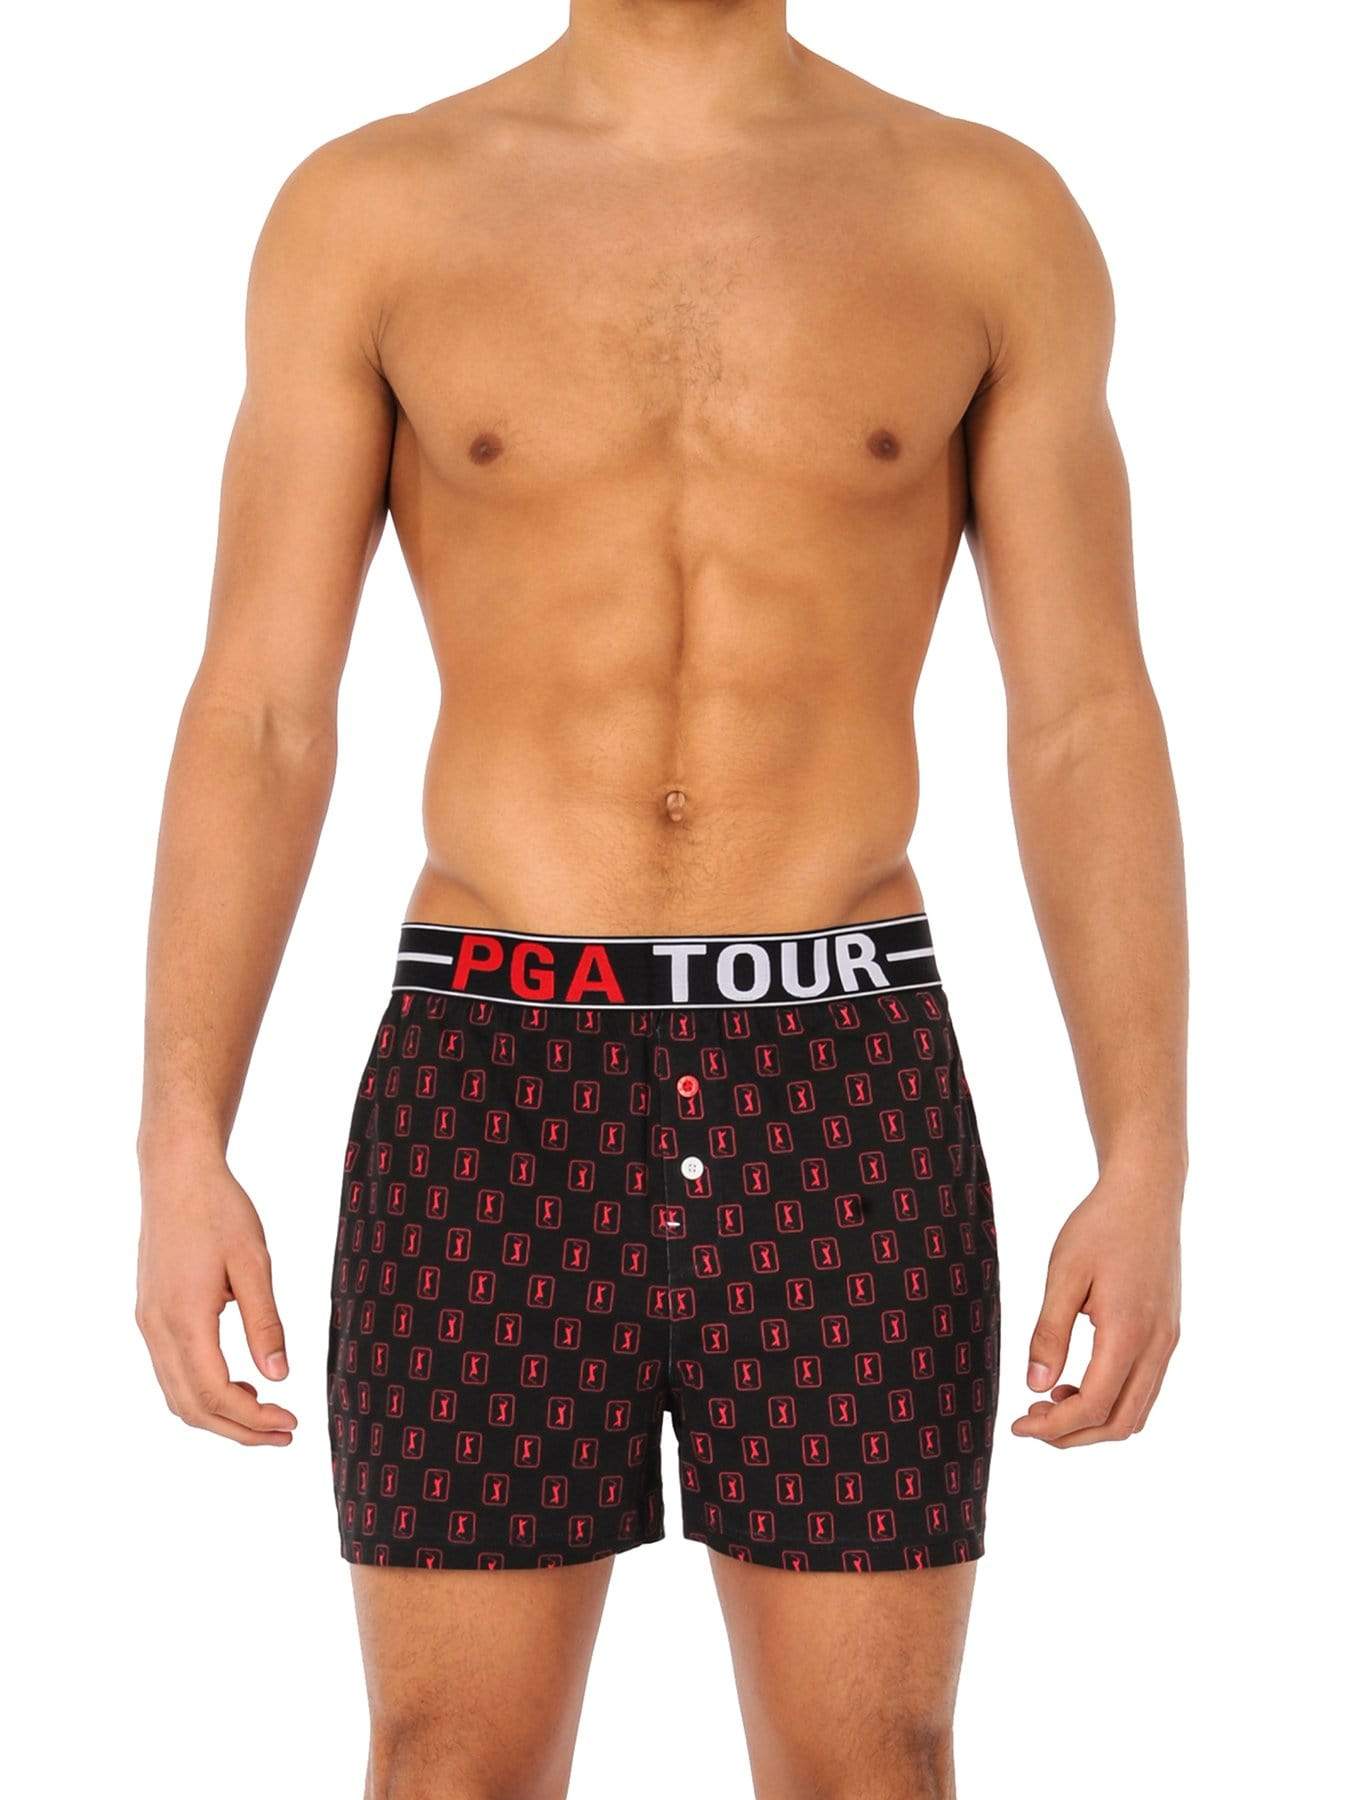 PGA TOUR Apparel Mens Allover Printed Loose Boxer Short Underwear, Size Medium, Black, 100% Cotton | Golf Apparel Shop